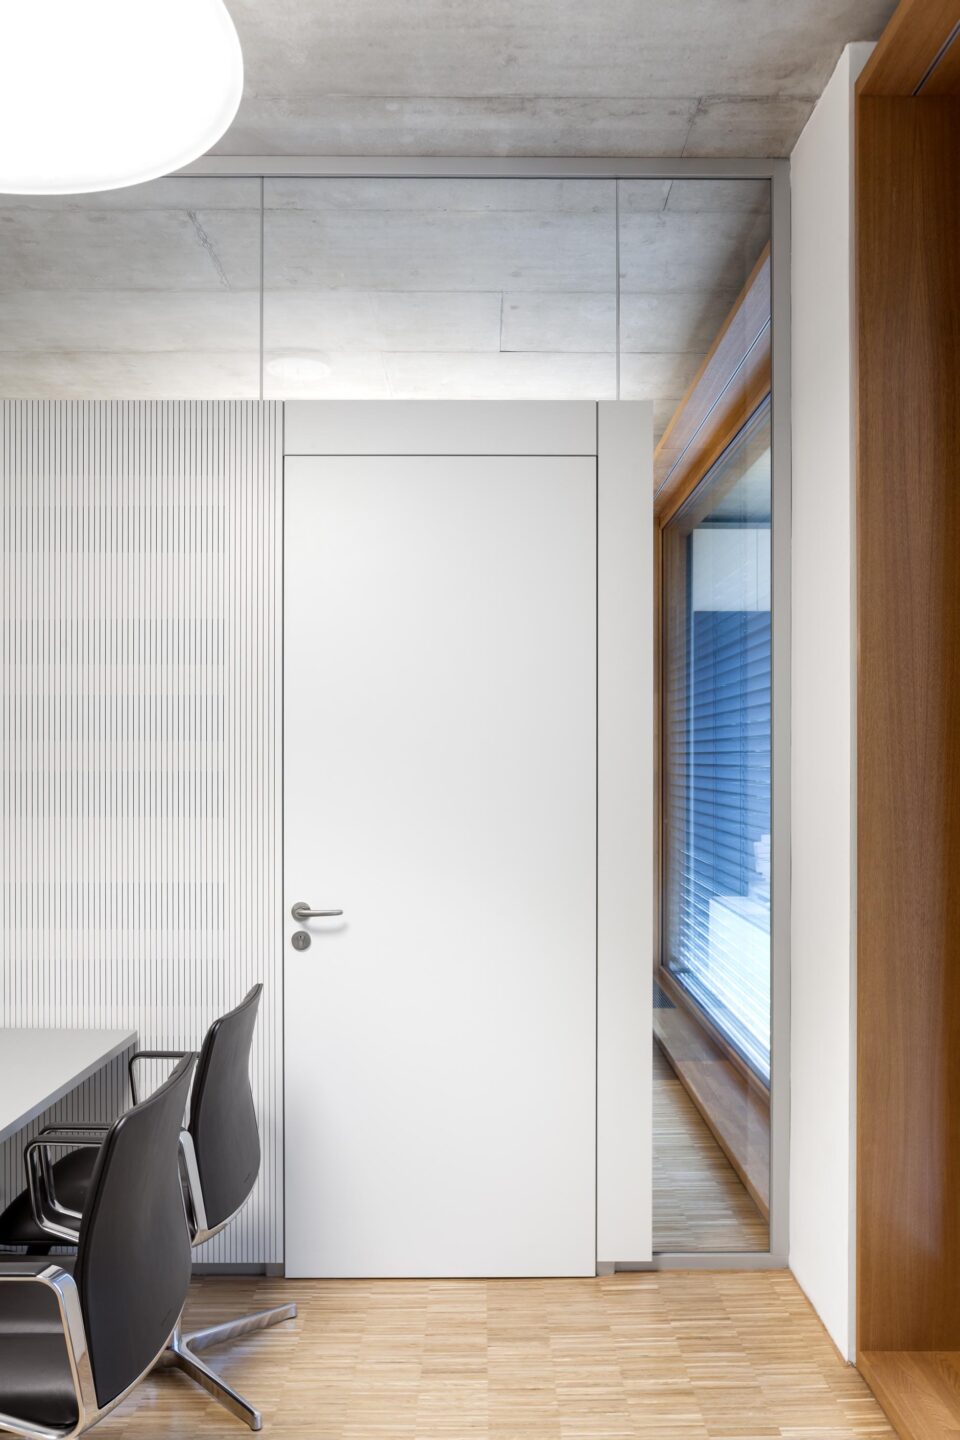 Karl Köhler GmbH │ system walls from feco │ wooden door elements